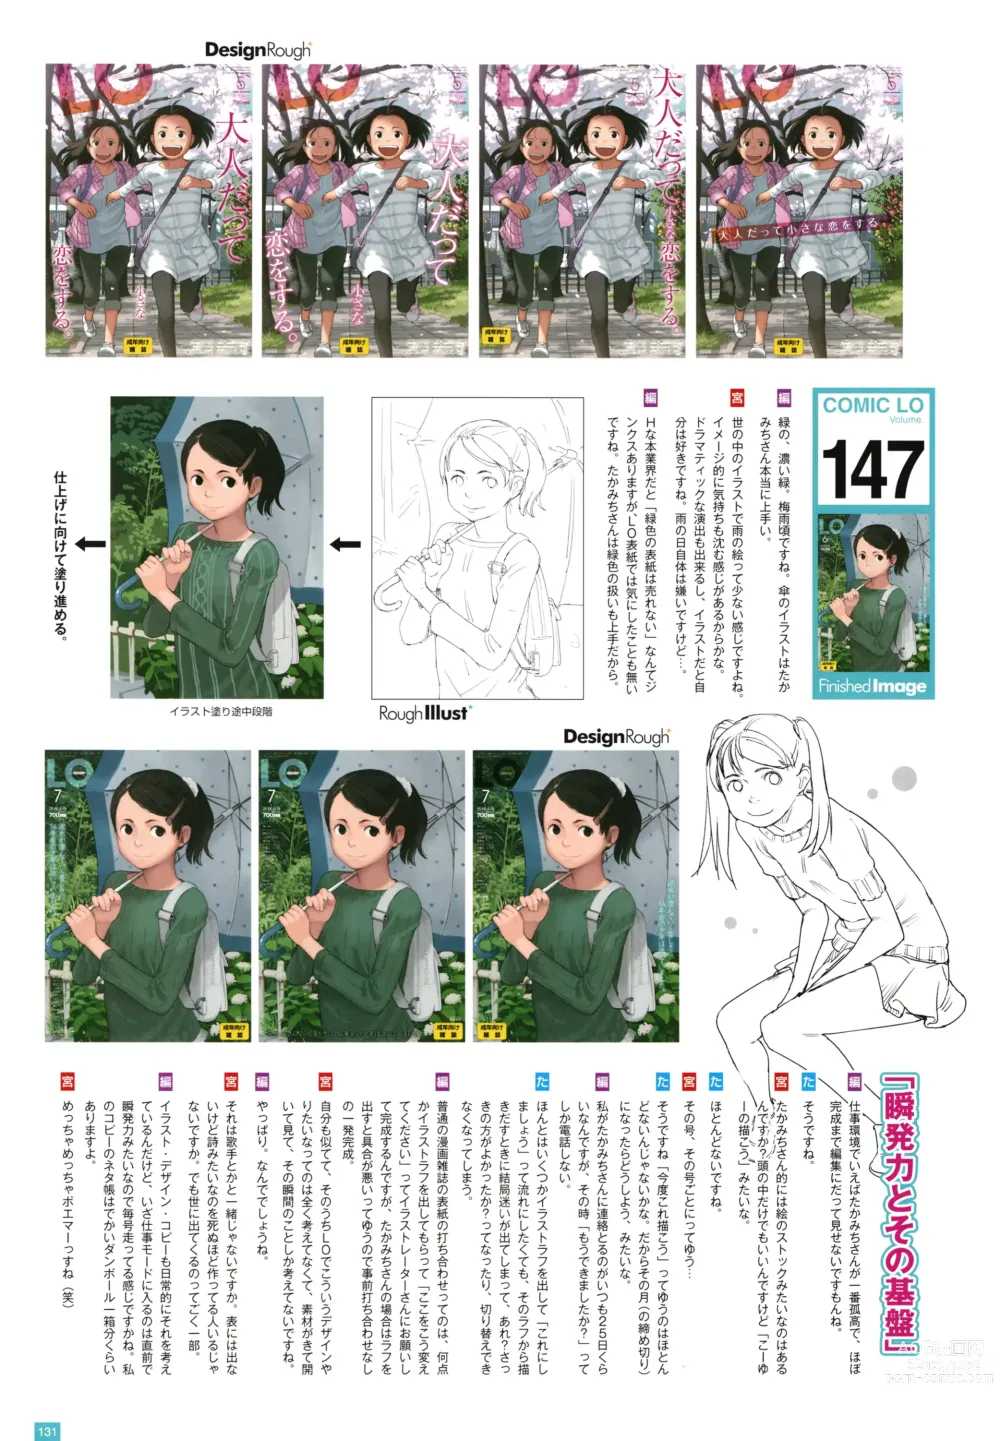 Page 134 of manga LO Artbook 2-B TAKAMICHI LO-fi WORKS